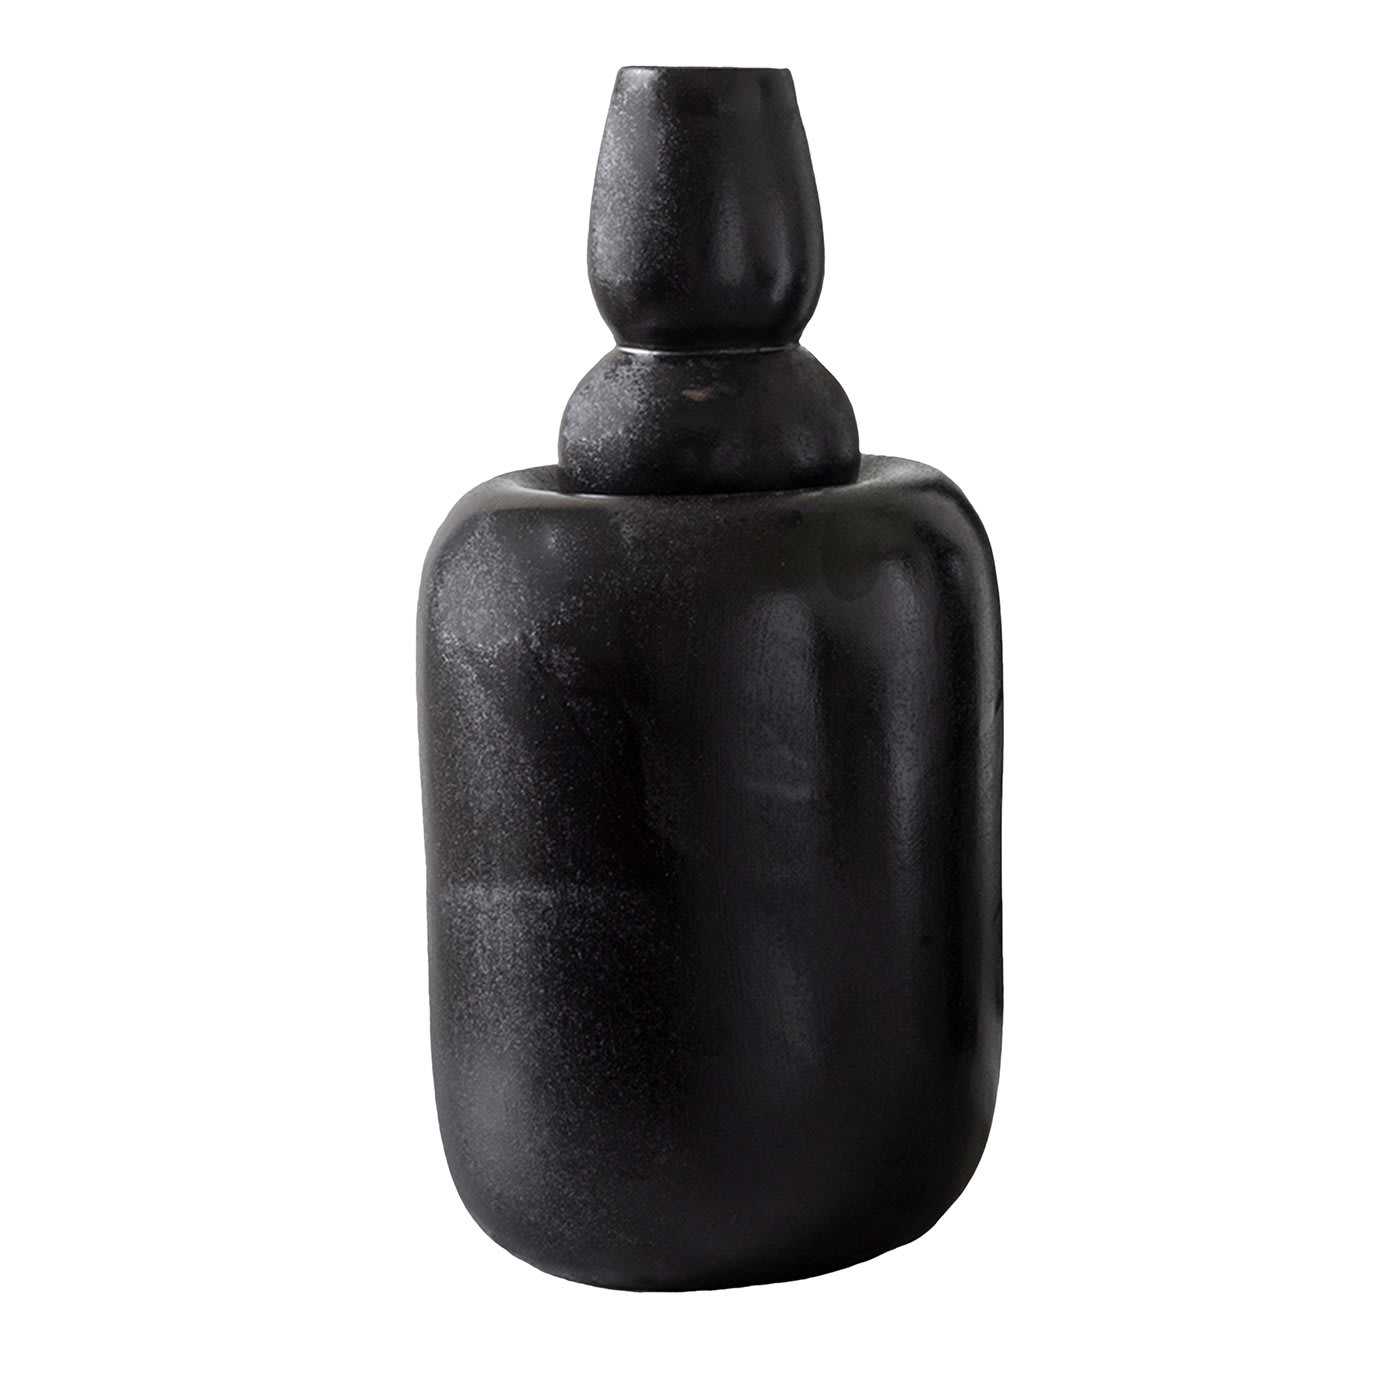 Botanica Black Vase with Bud Top - Gianfranco Conte